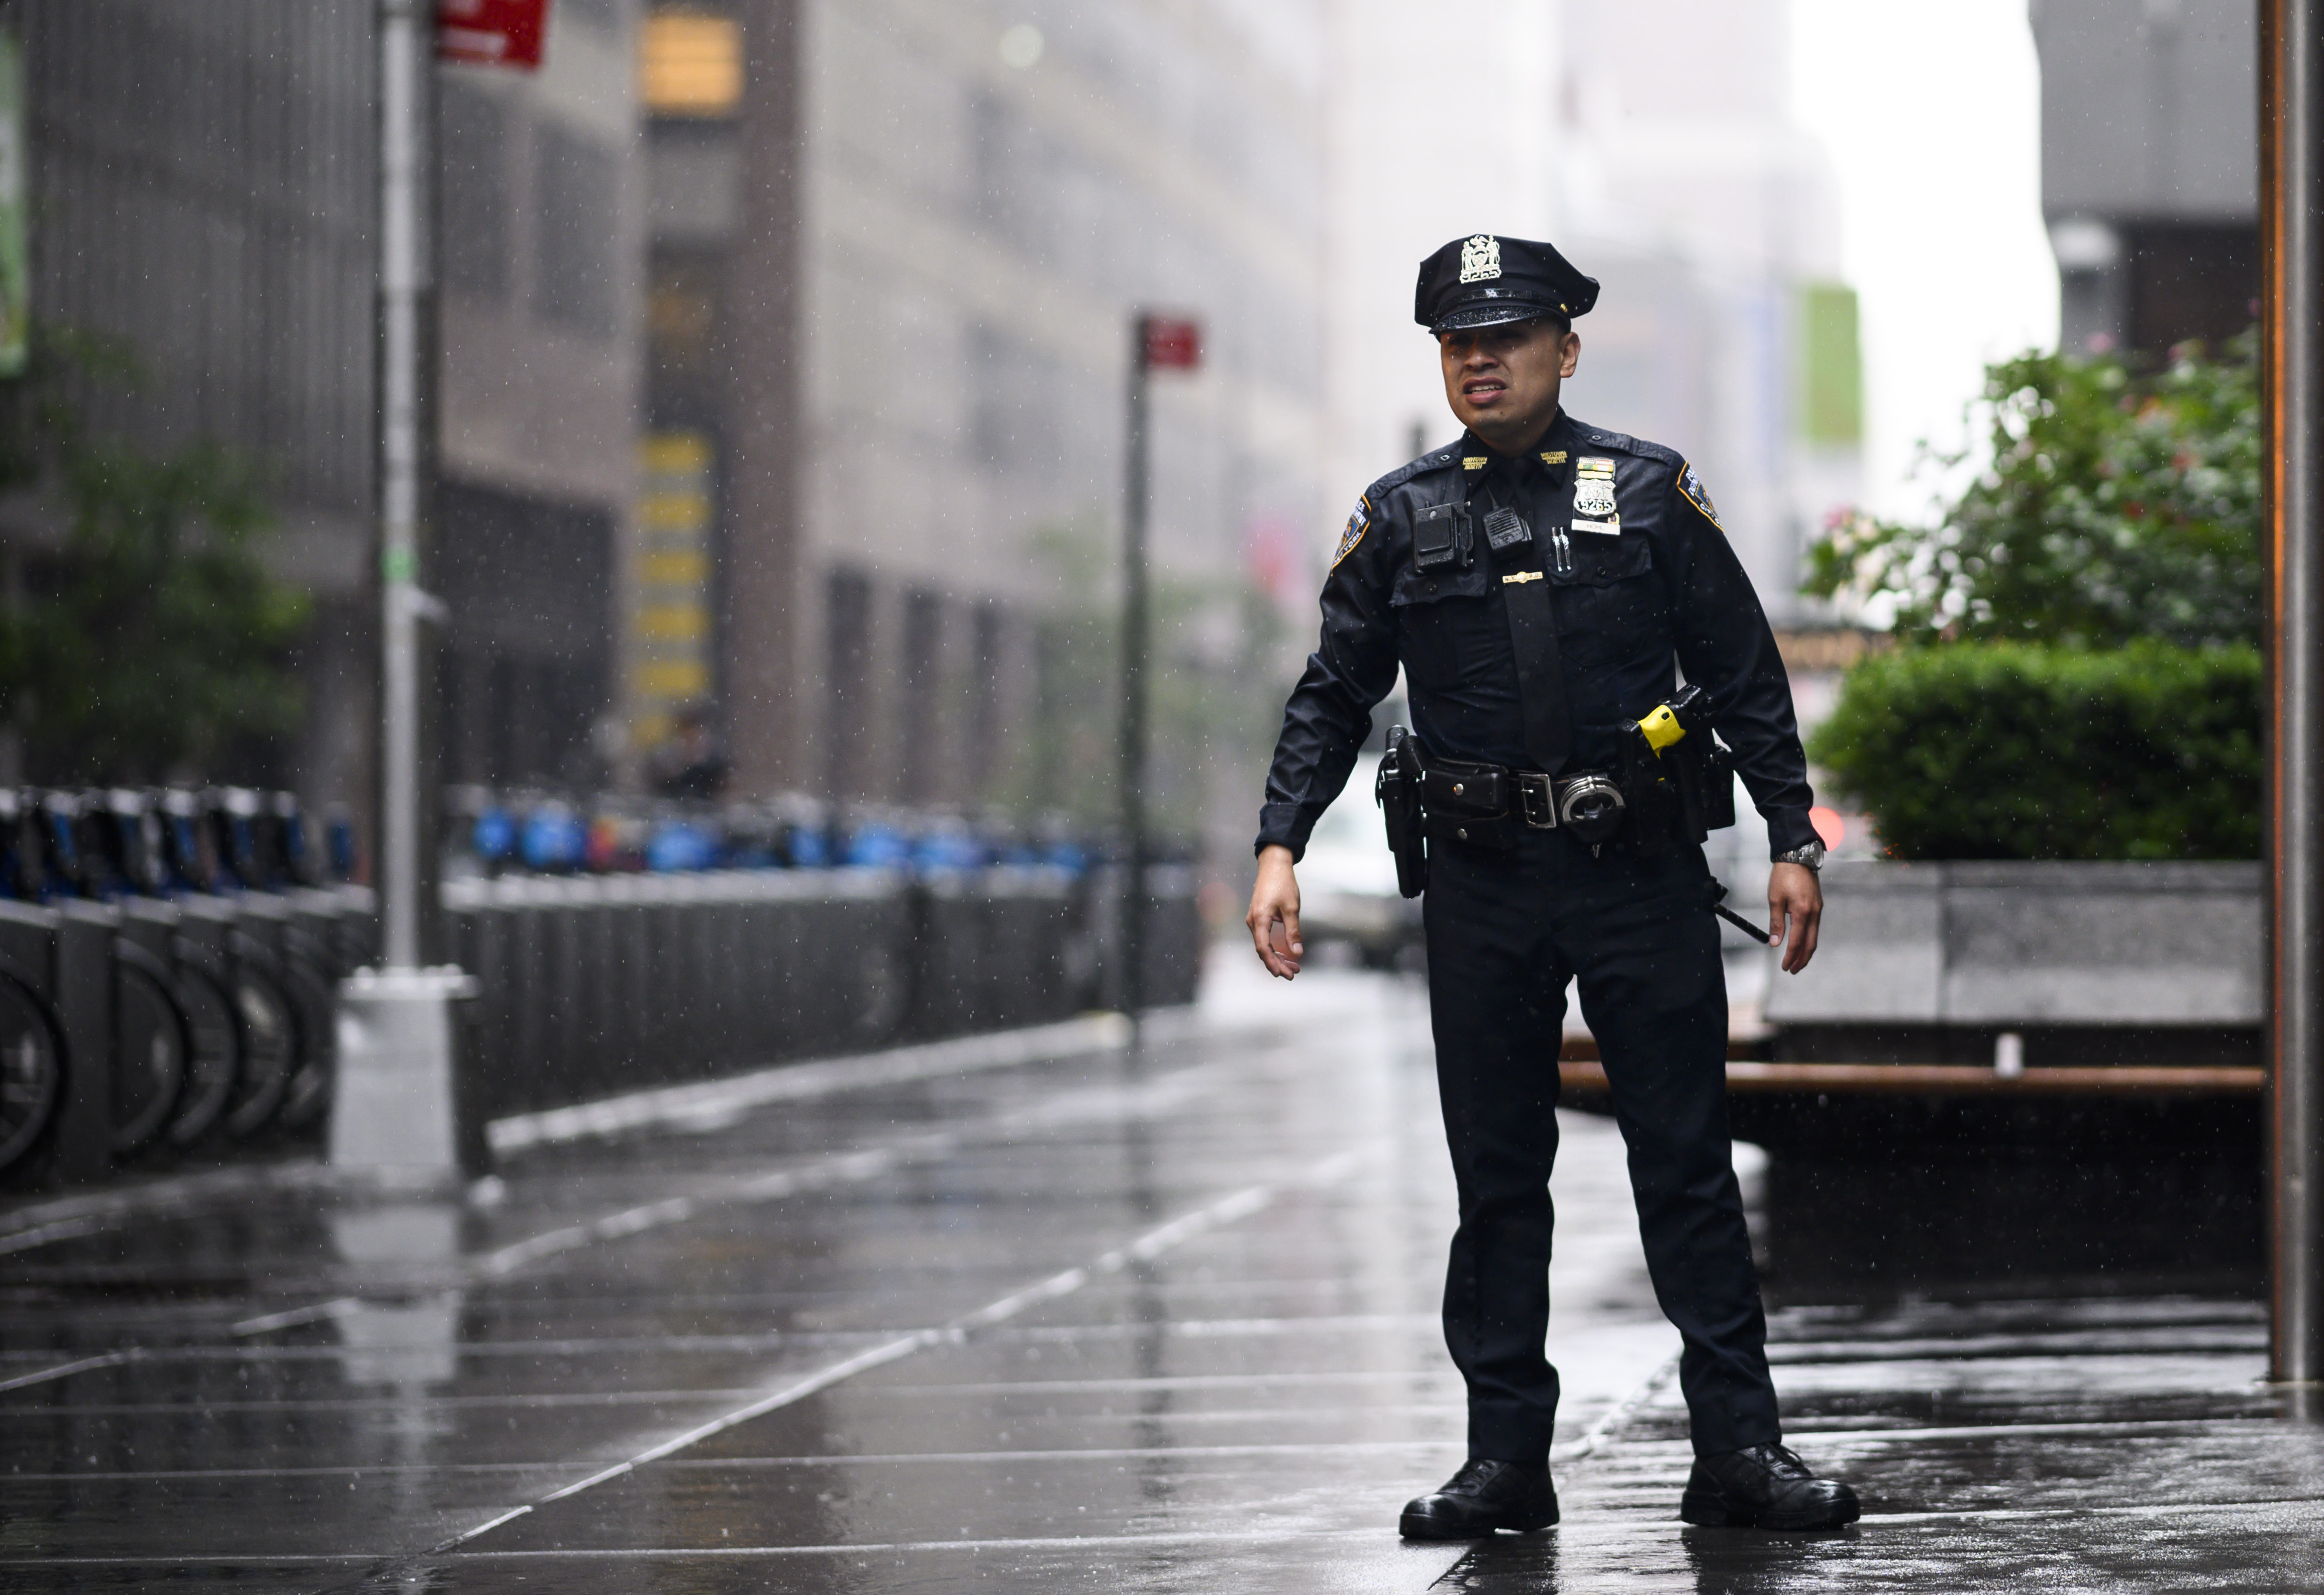 Pleasing the policeman. NYPD Police униформа. Мем полис. Полицейский офицер. Форма полиции Нью-Йорка.